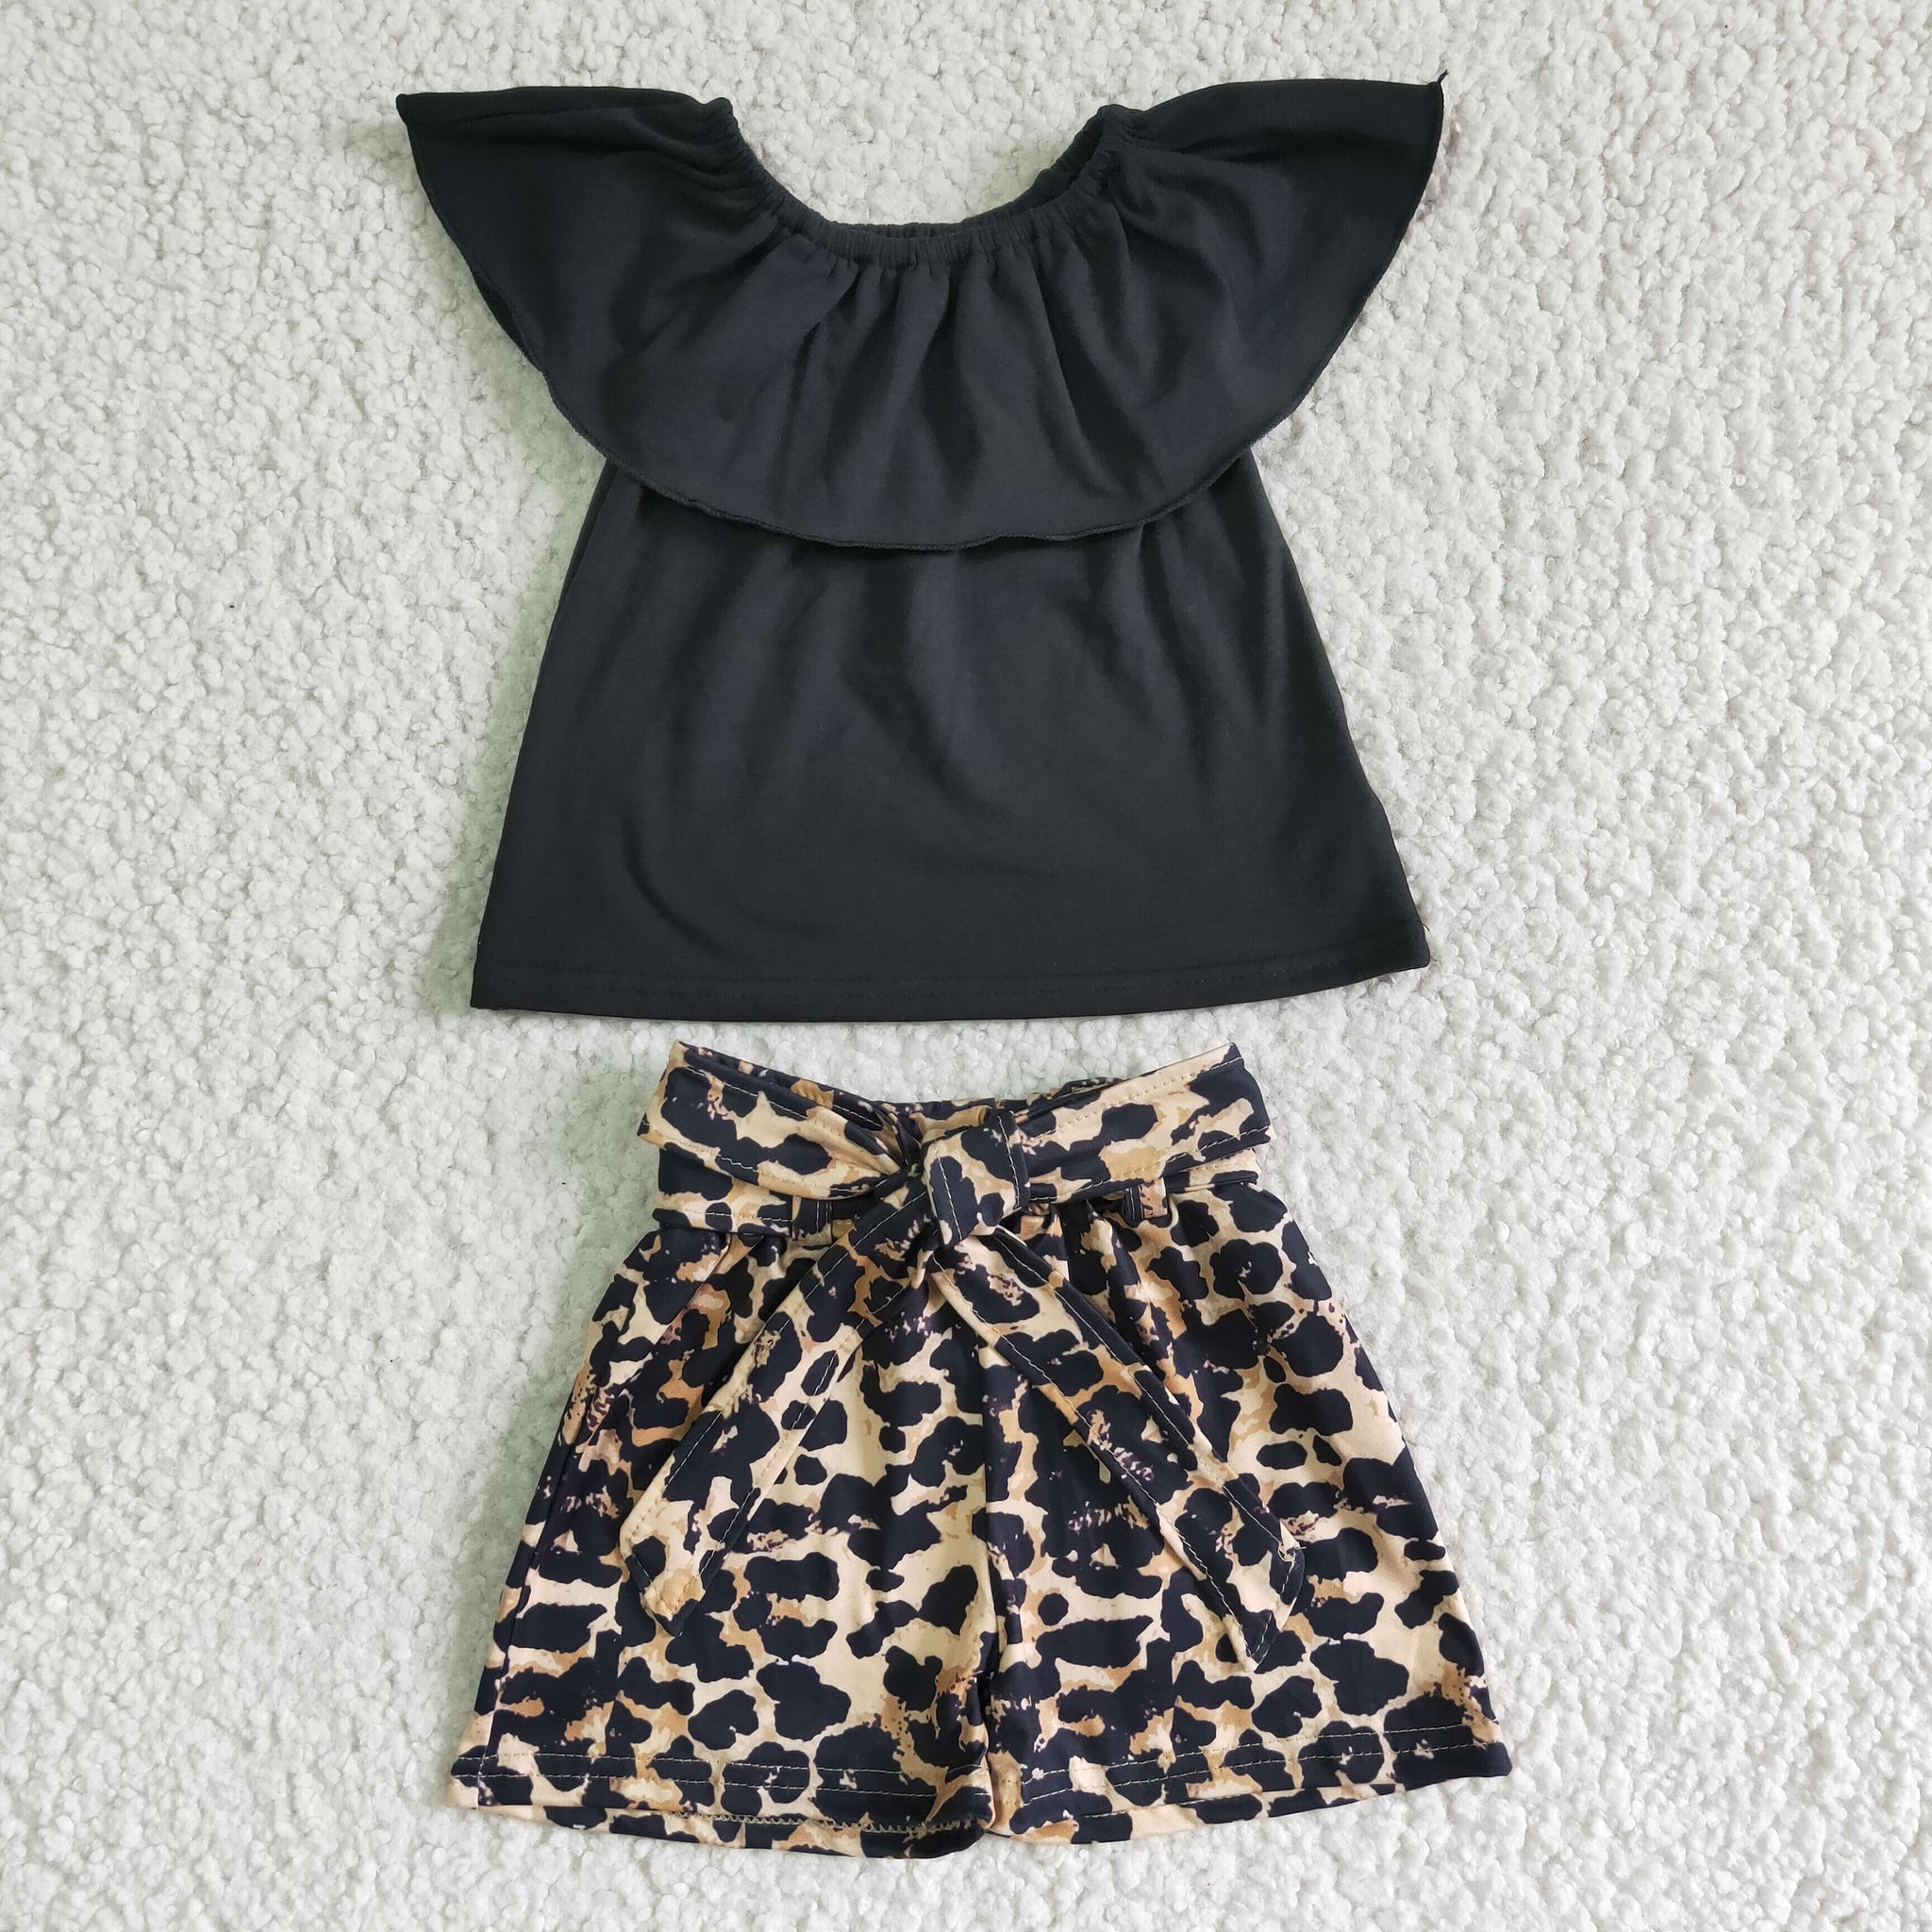 GSSO0082 kids clothing girls black leopard girl summer outfit